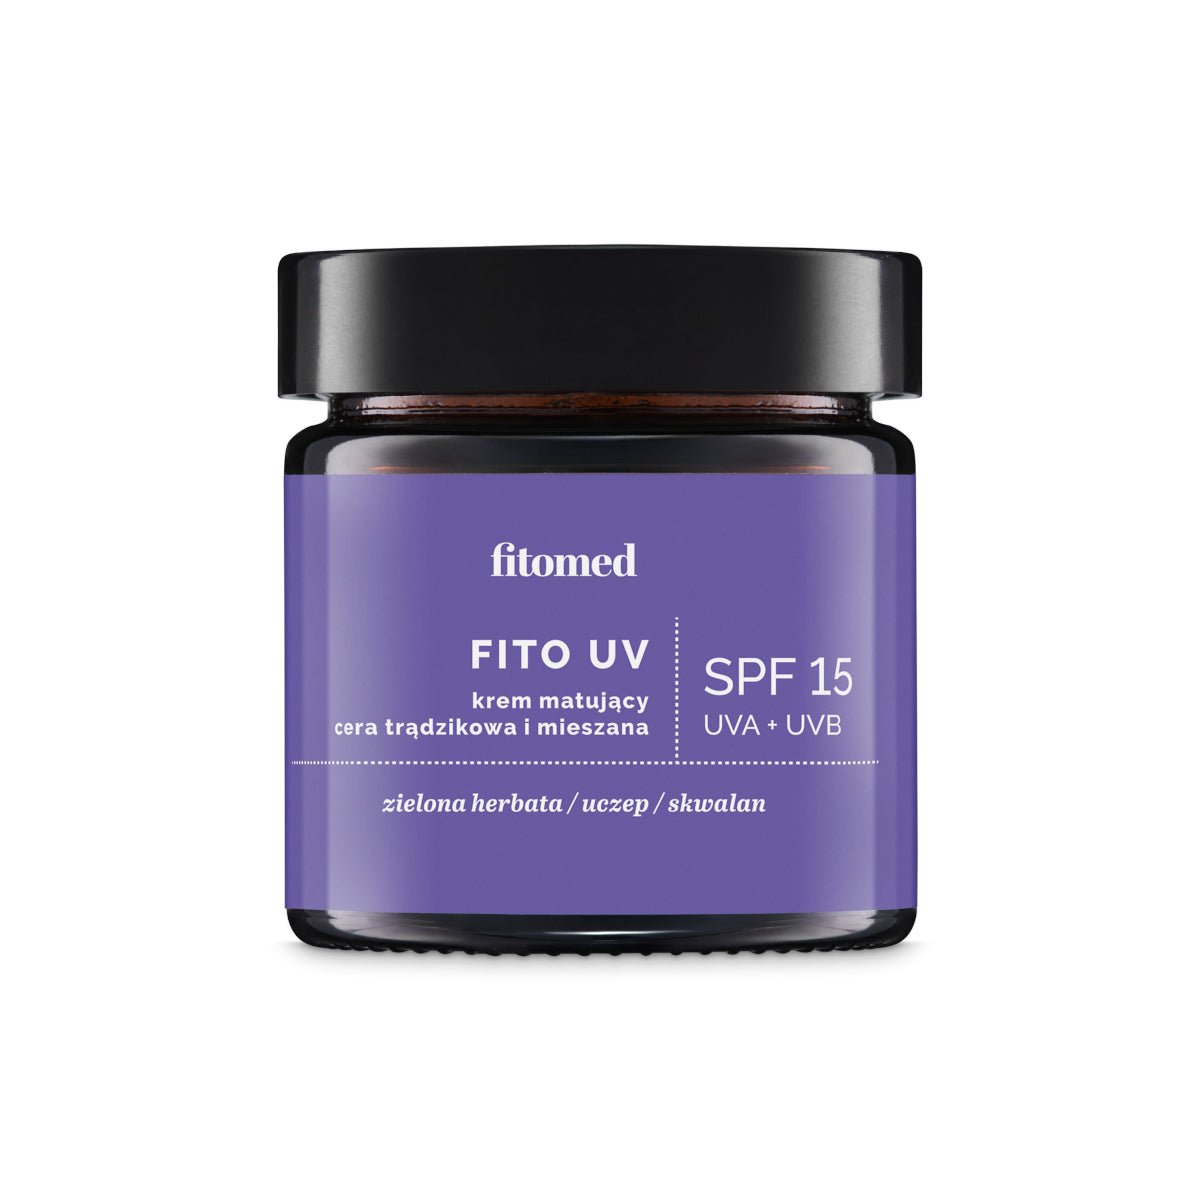 FITO UV mattifying cream SPF15 for acne and combination skin 50 ml FITOMED